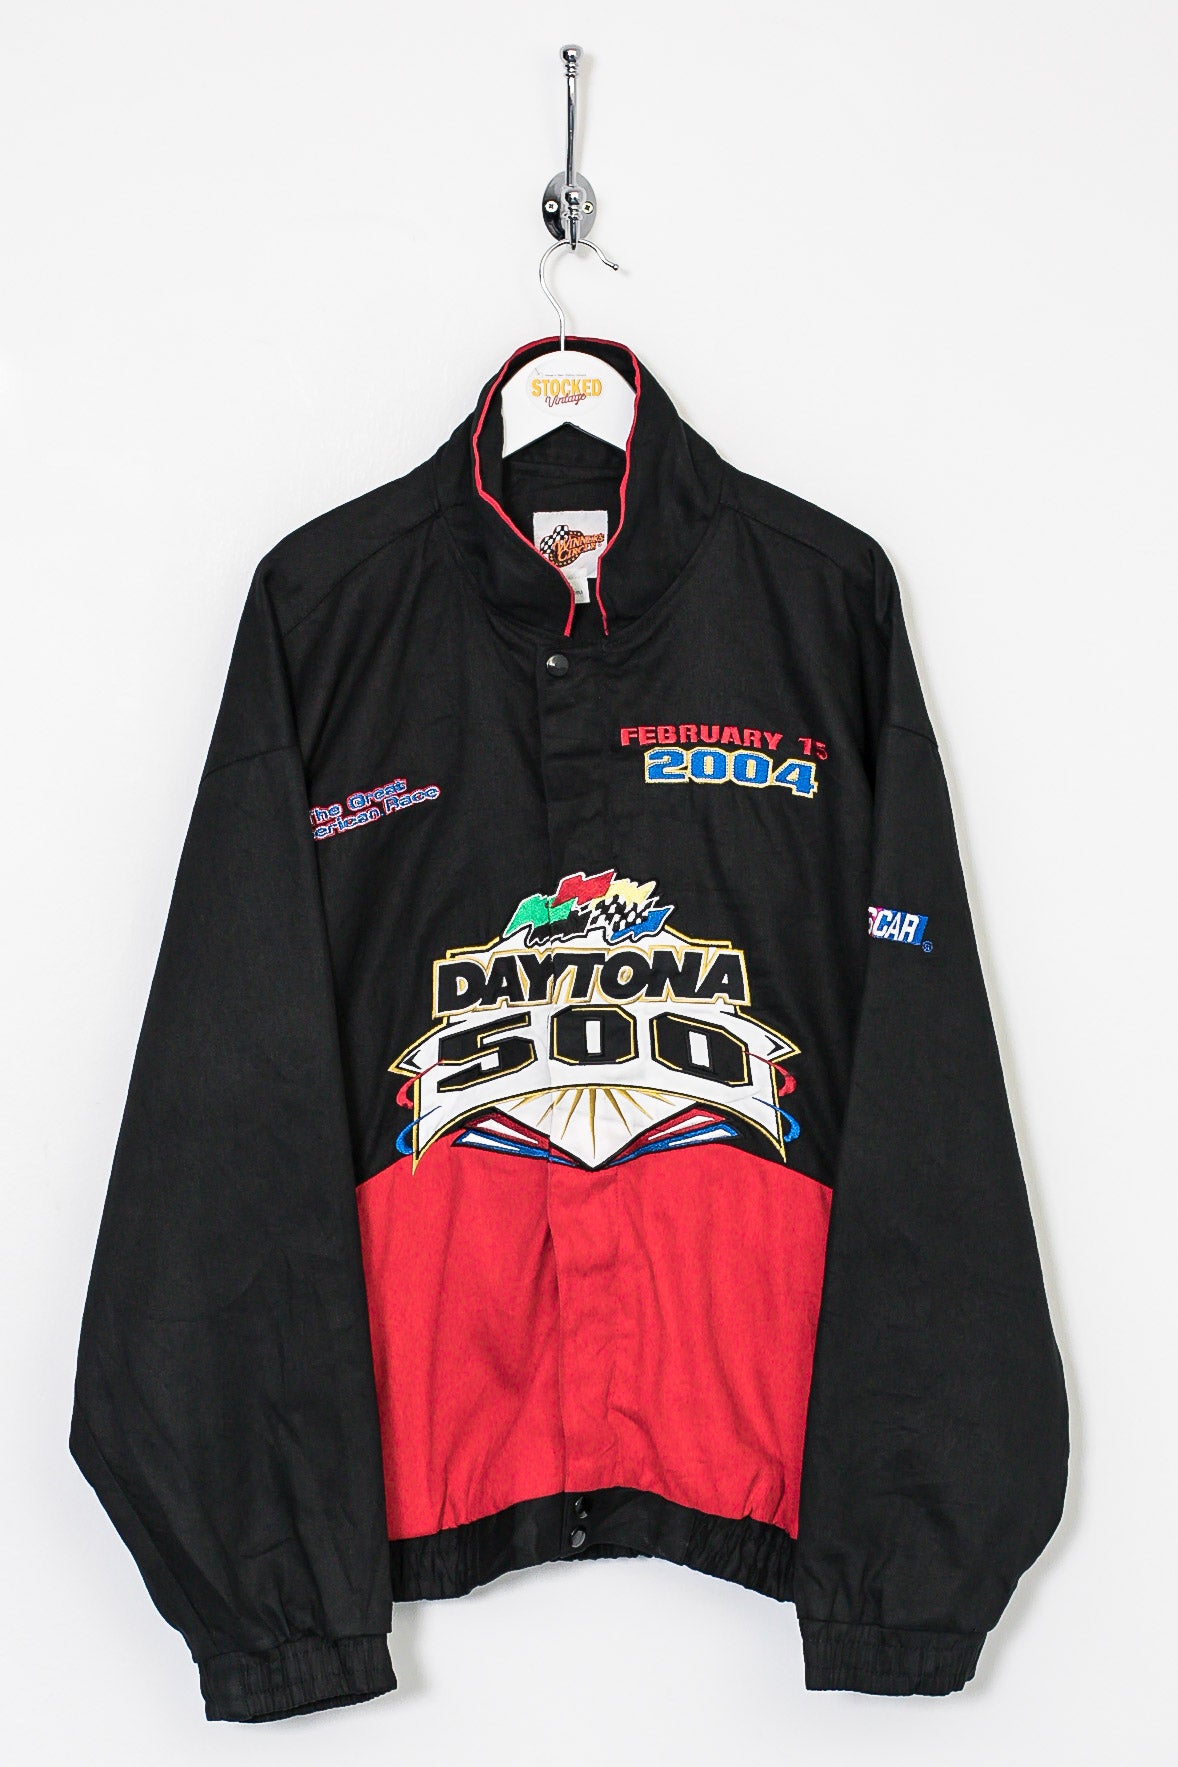 00s Nascar Daytona 500 Racing Jacket (M)